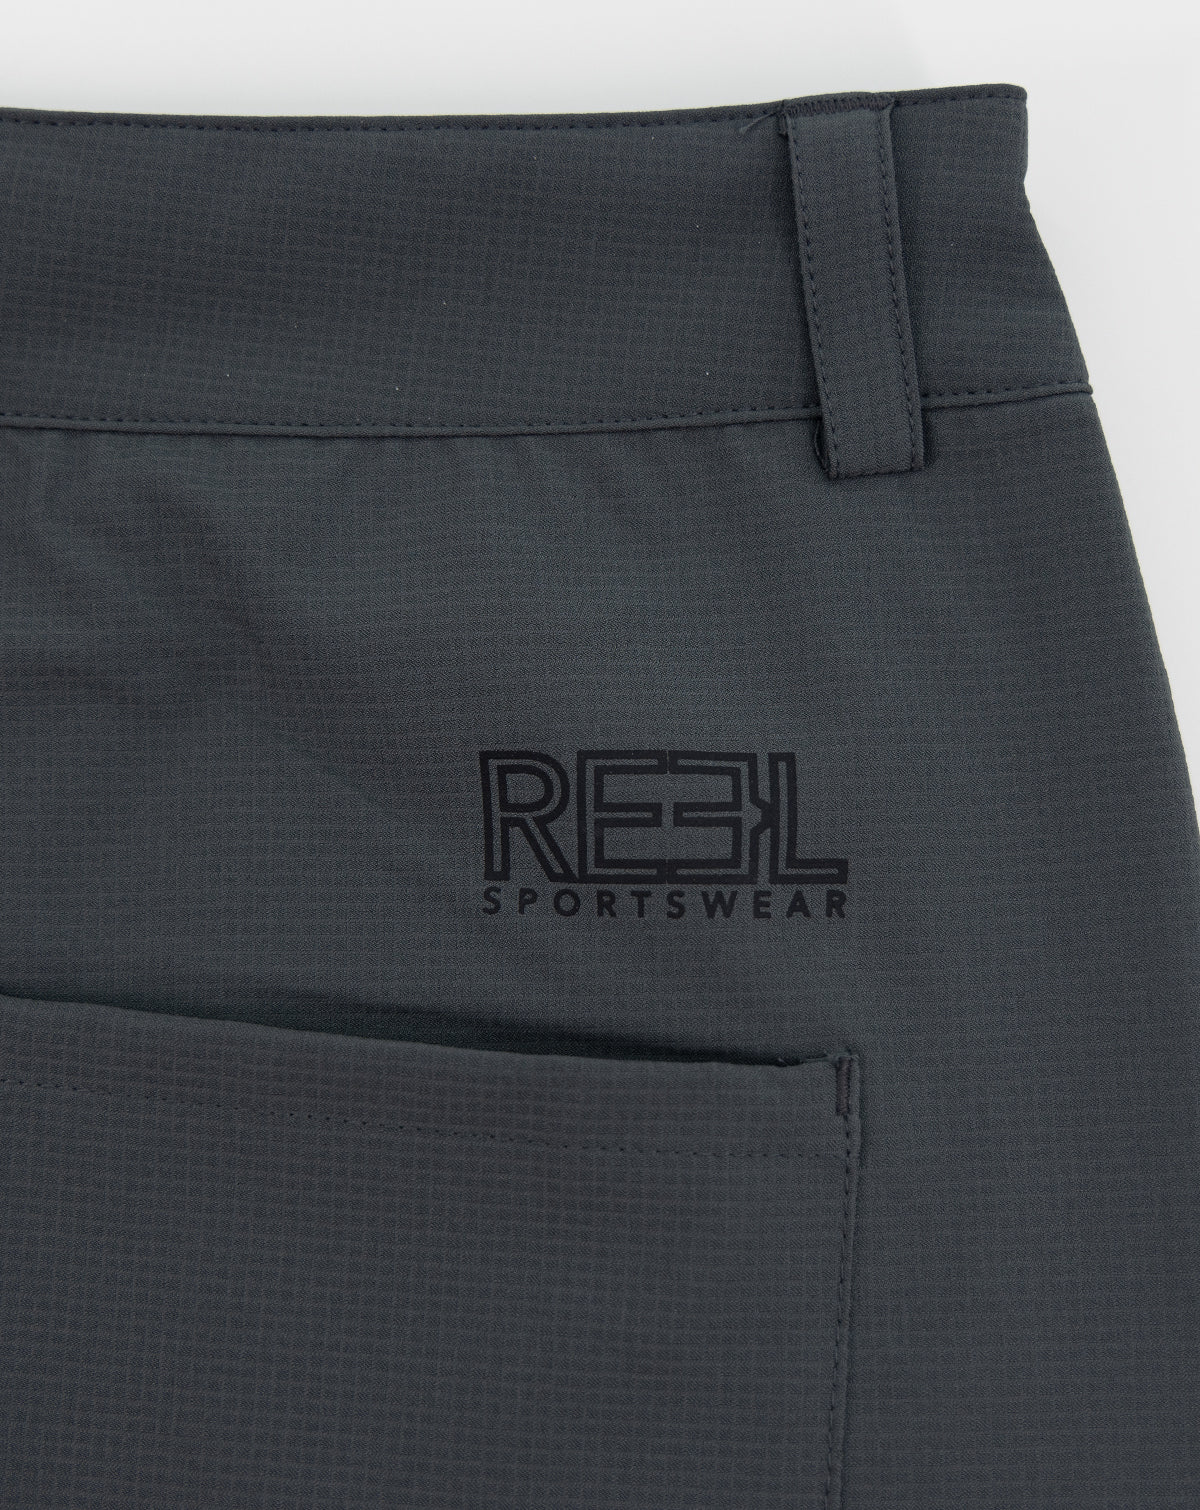 Tidal+ fishing Shorts - Reel Sportswear performance bottoms - Charcoal